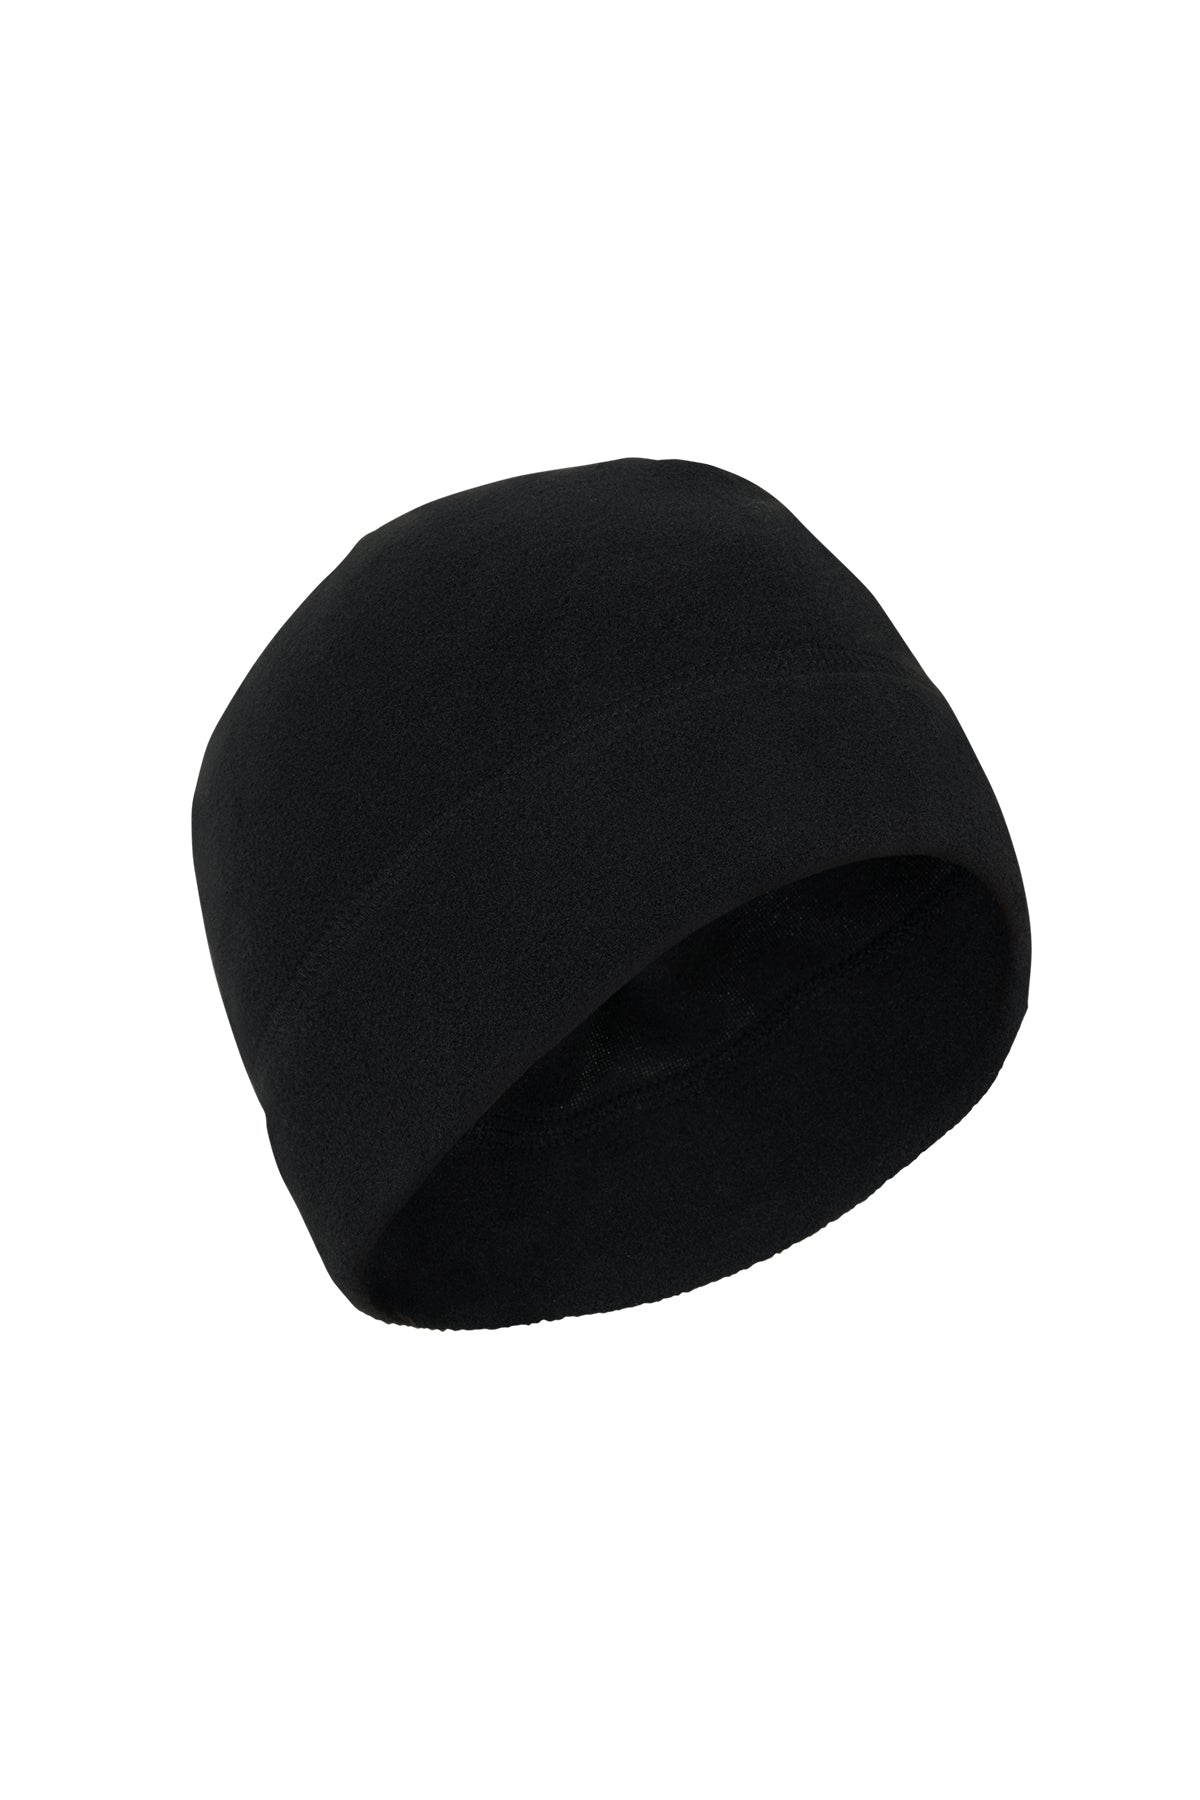 Wholesale Thermal Unisex Hats for Men & Women Army Grade Fleece Thermal Hats - Black